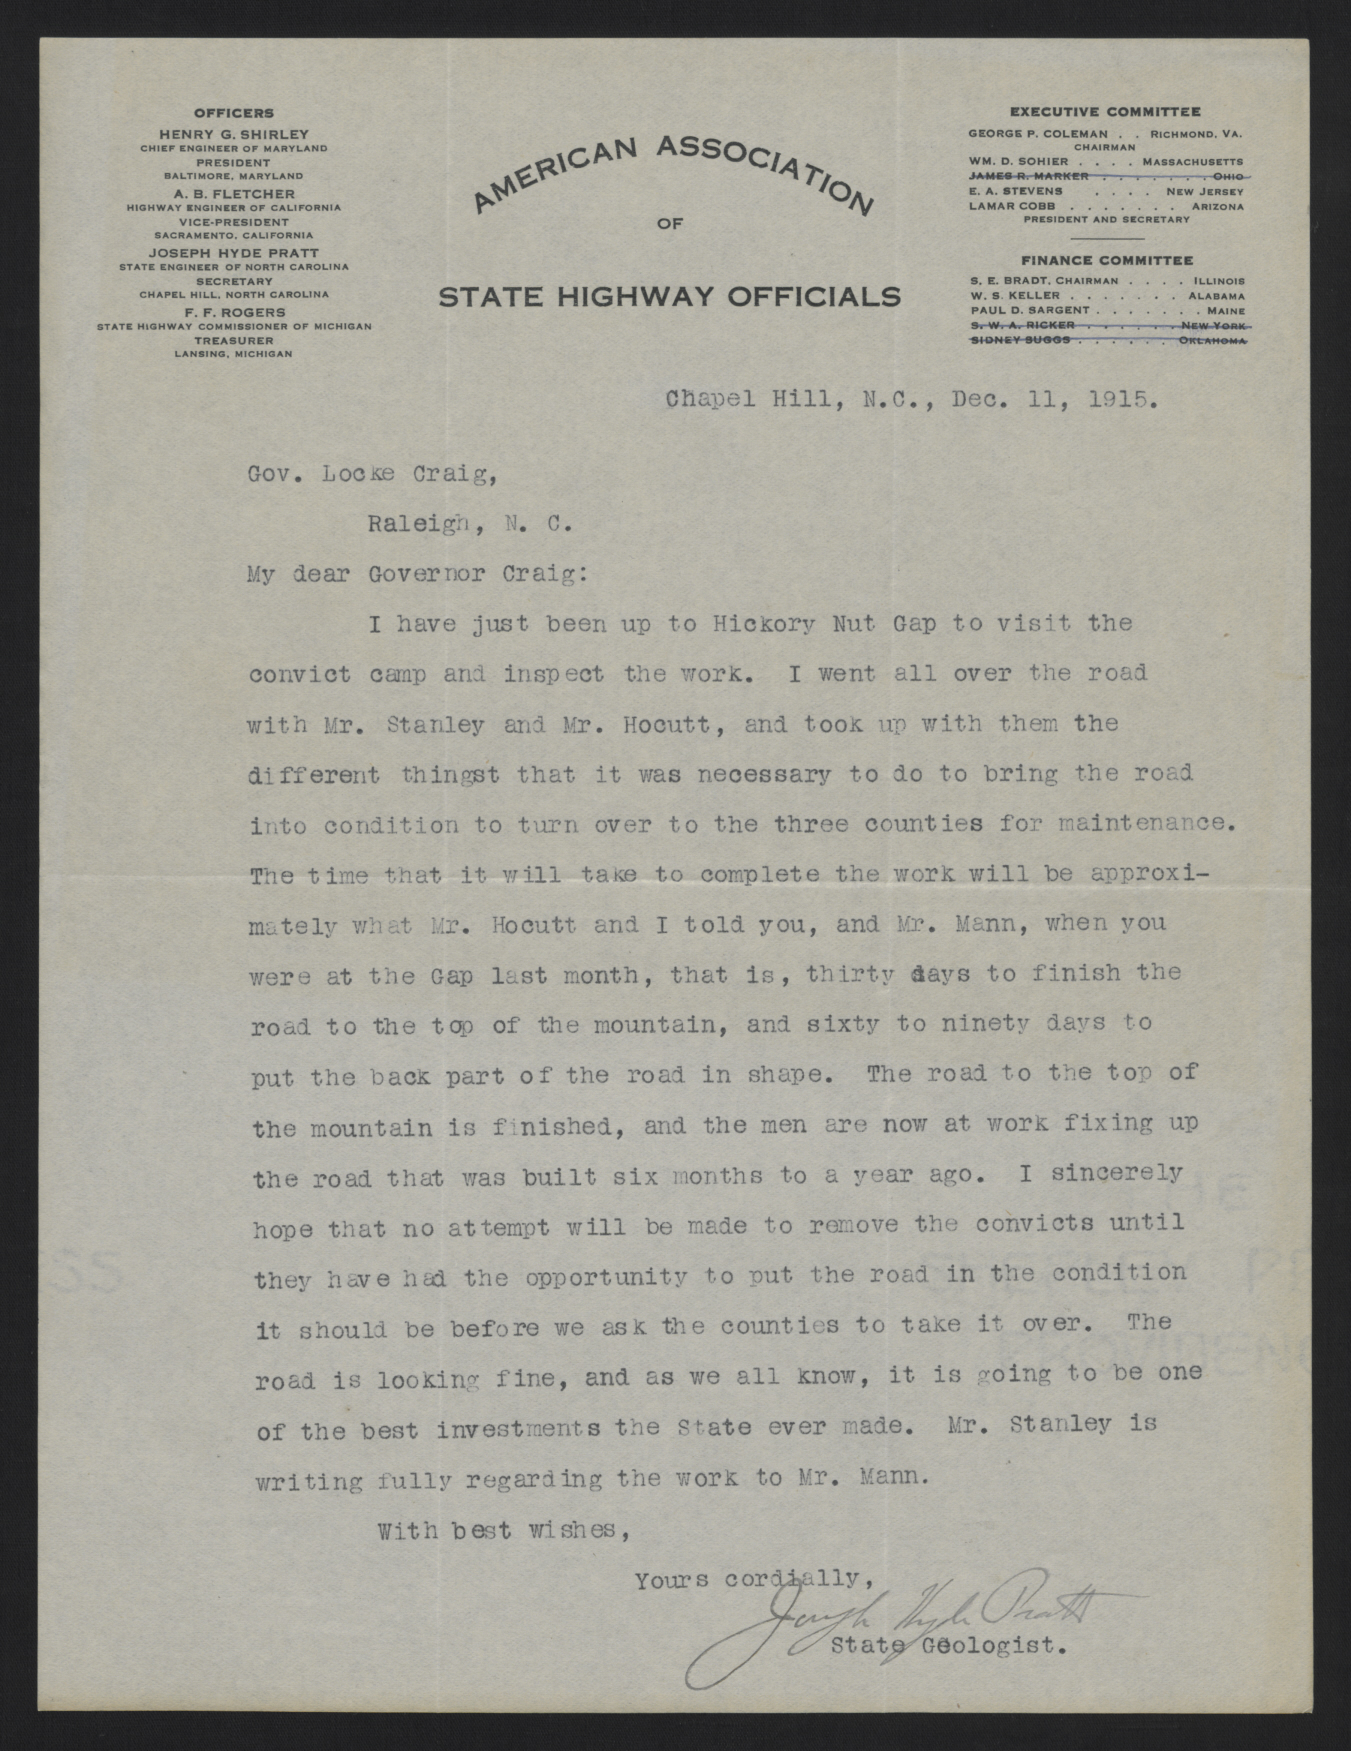 Letter from Pratt to Craig, December 11, 1915